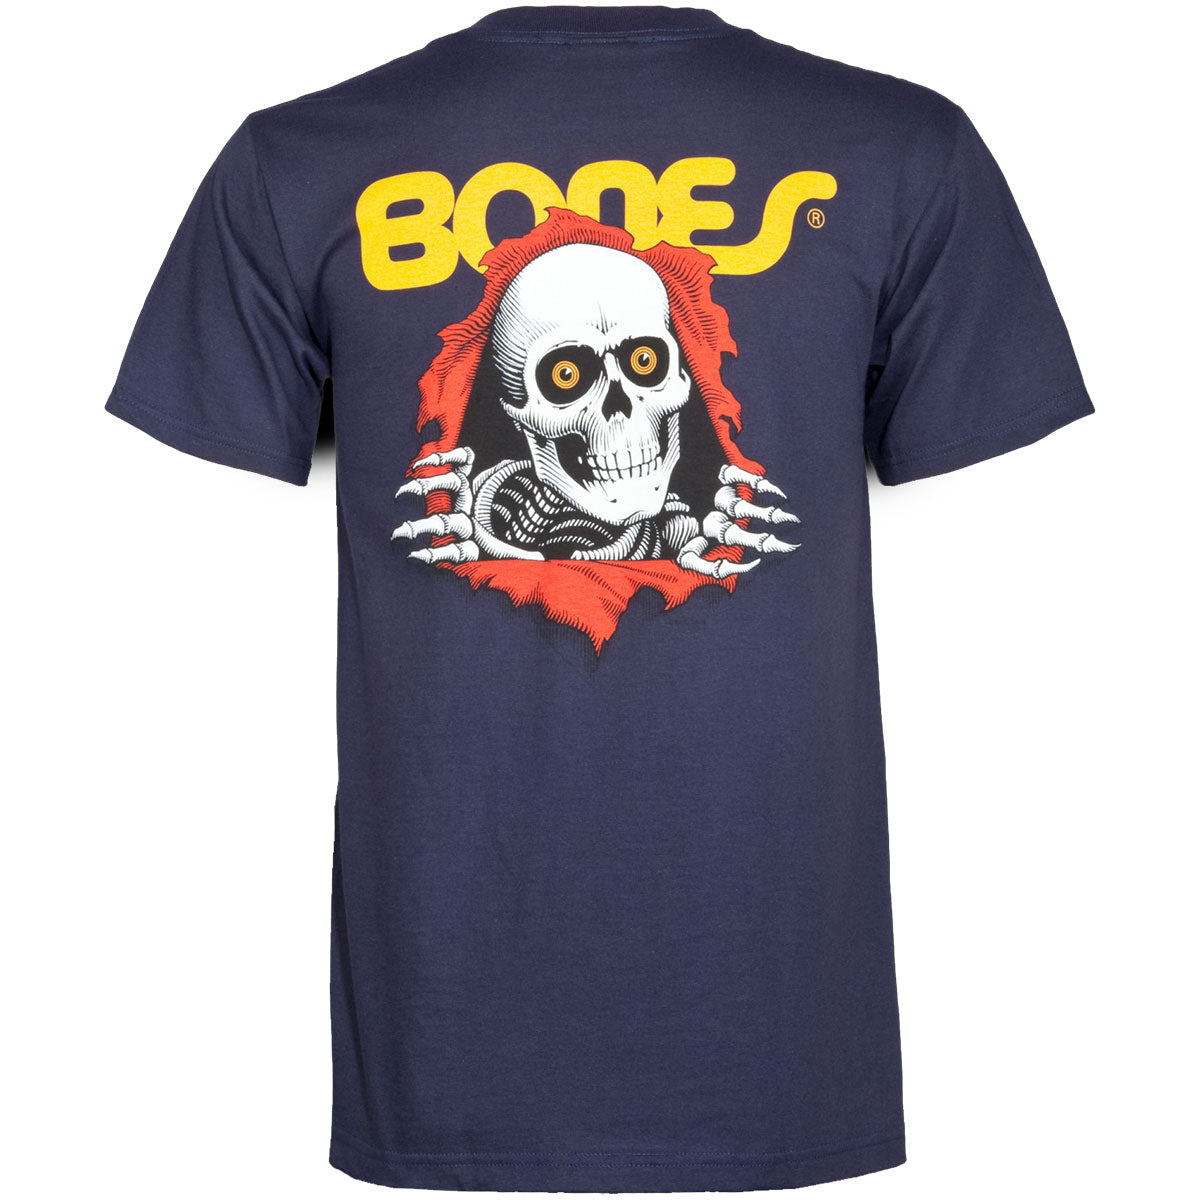 Powell-Peralta Ripper T-Shirt-Navy-XL image 1